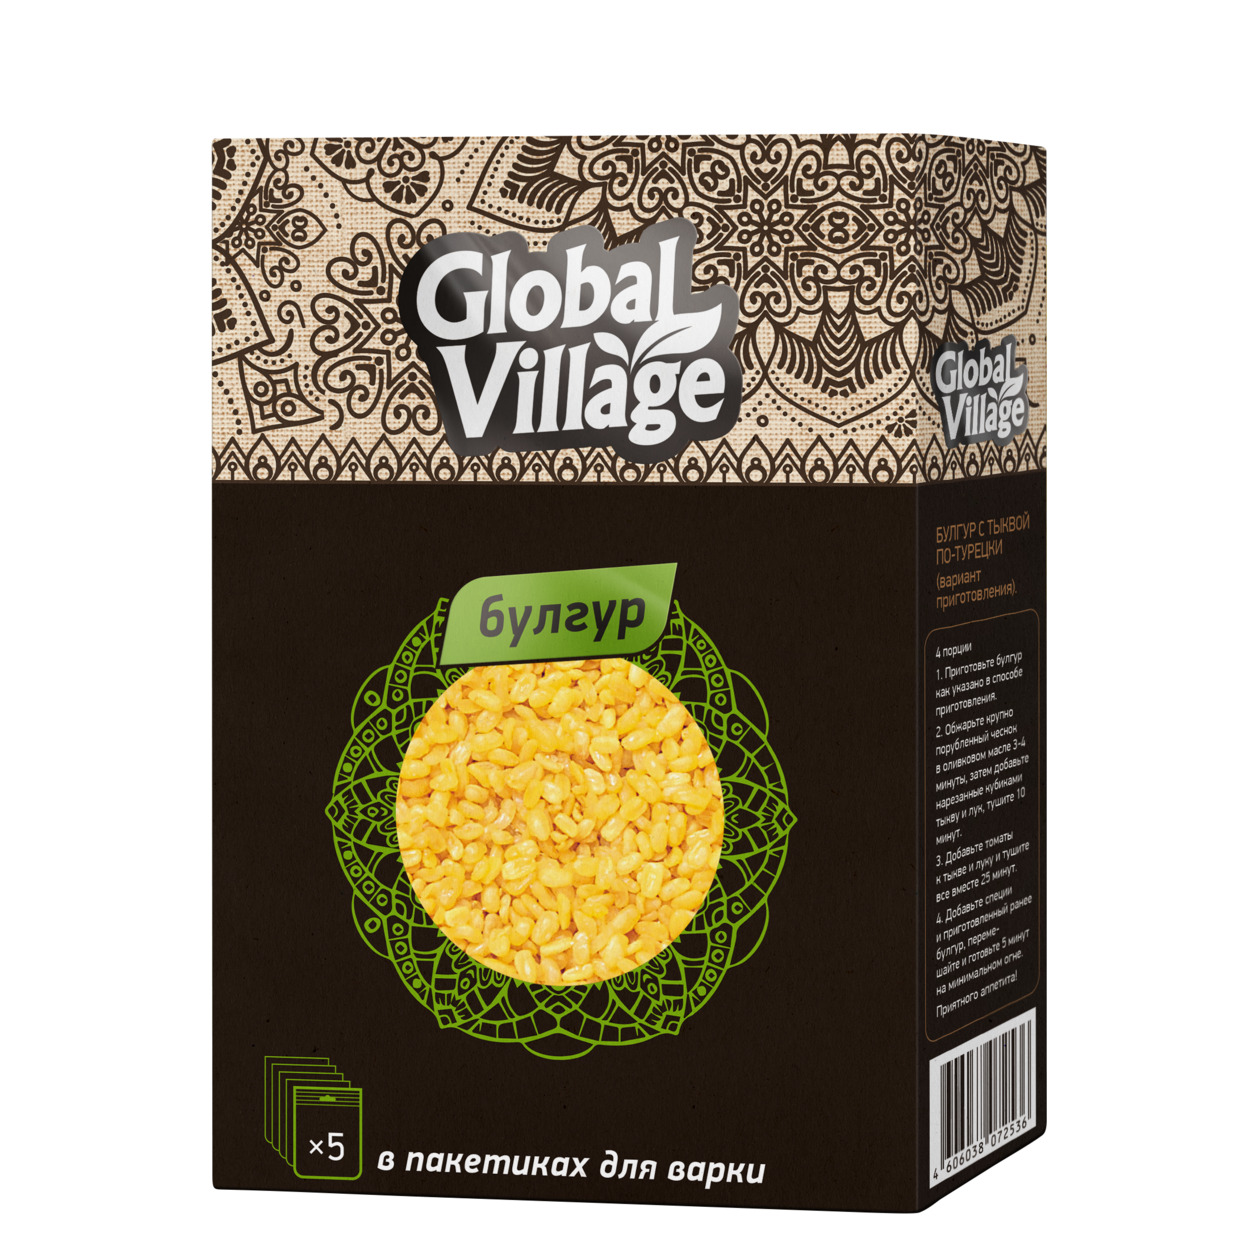 Крупа пшеничная булгур в пакетиках для варки Global Village 5*80 гр по акции в Пятерочке